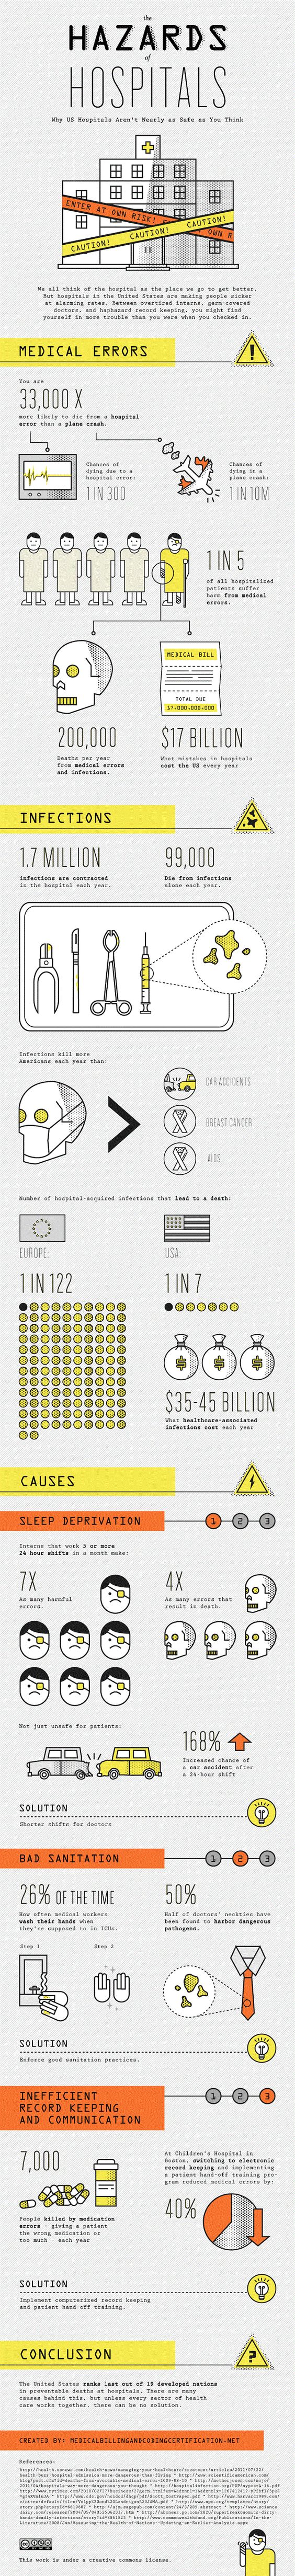 hazards of hospitals statistical infographic